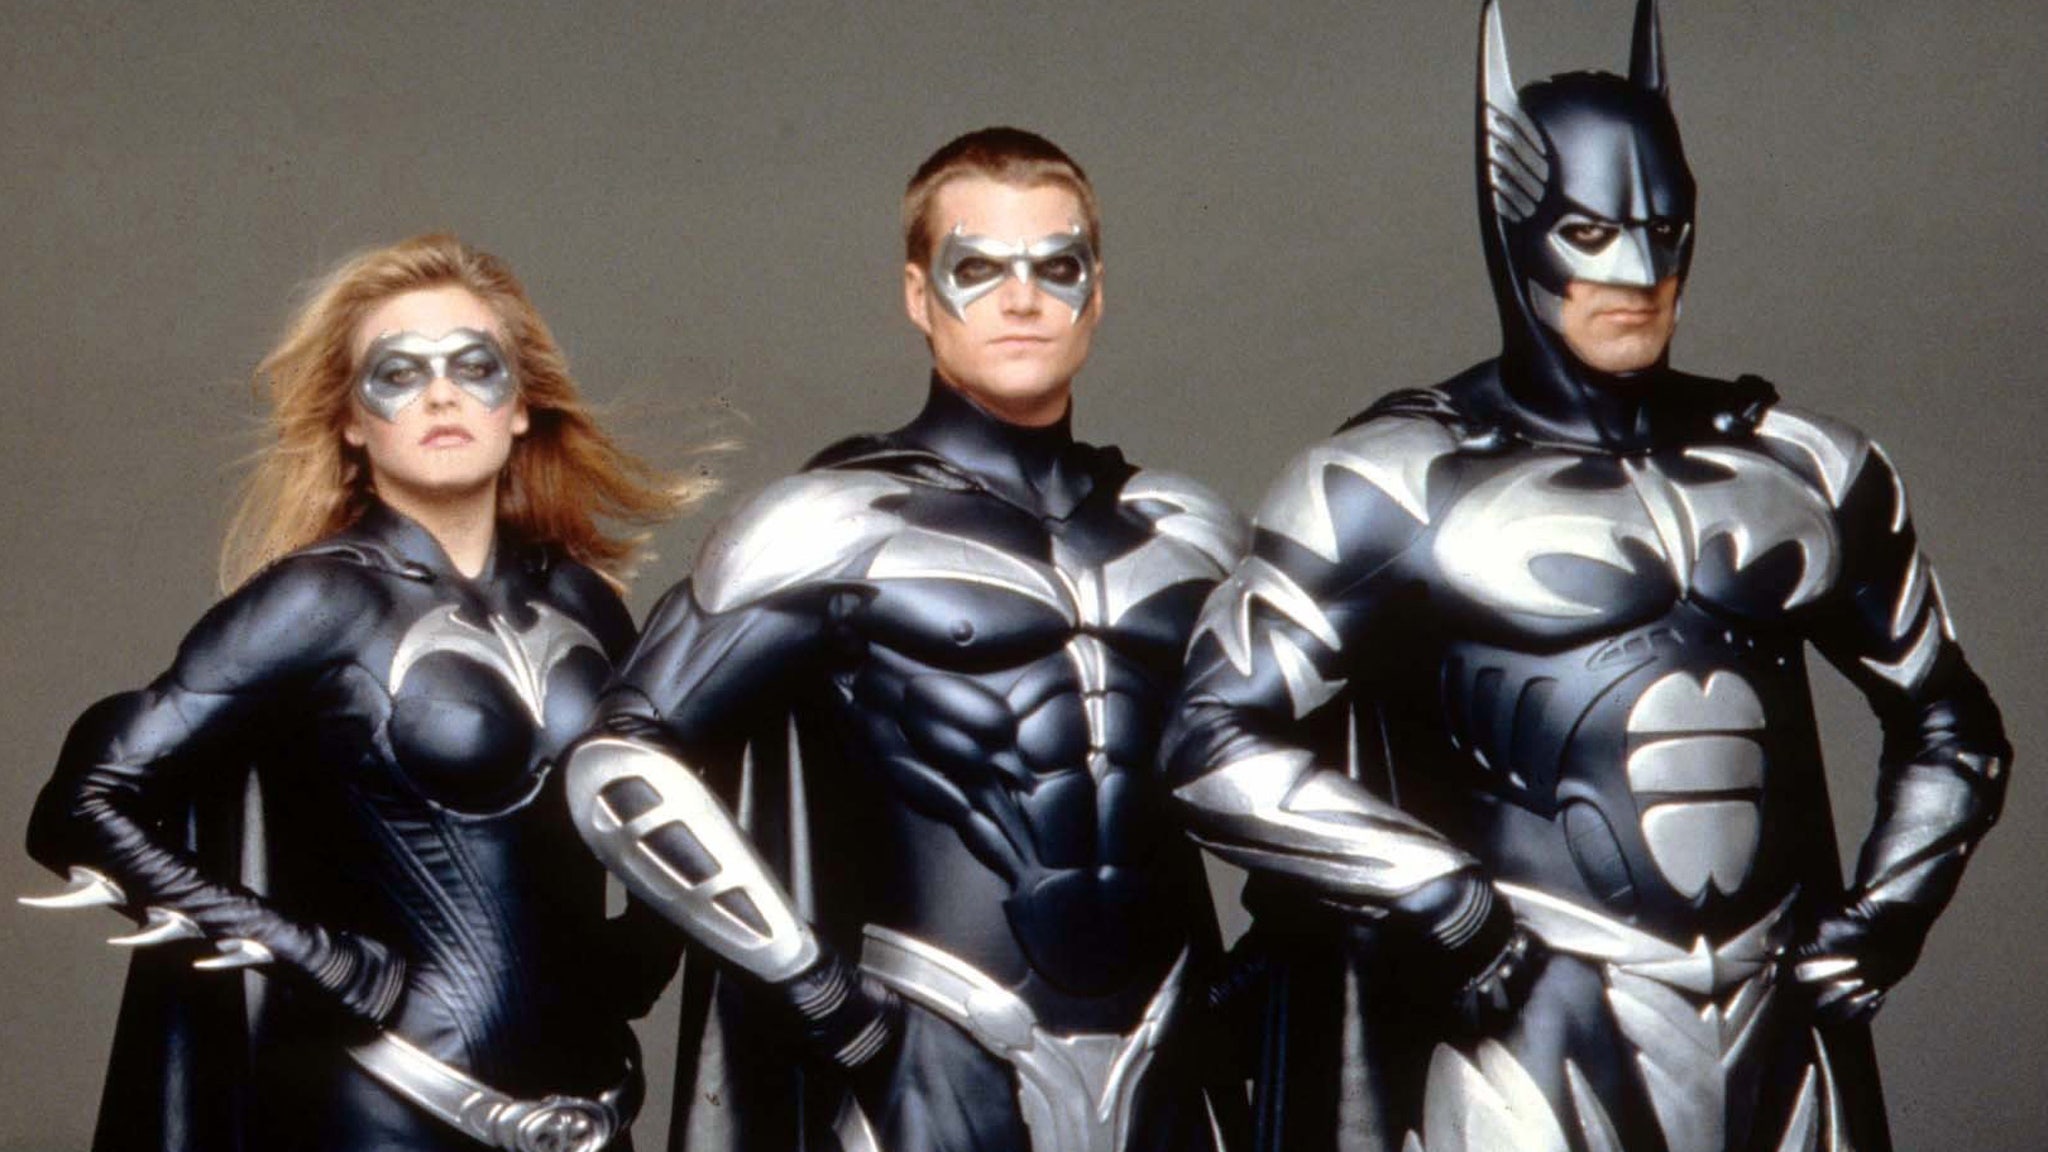 Alicia Silverstone Faced 'Hurtful' Body Shaming As Batgirl in Batman & Robin